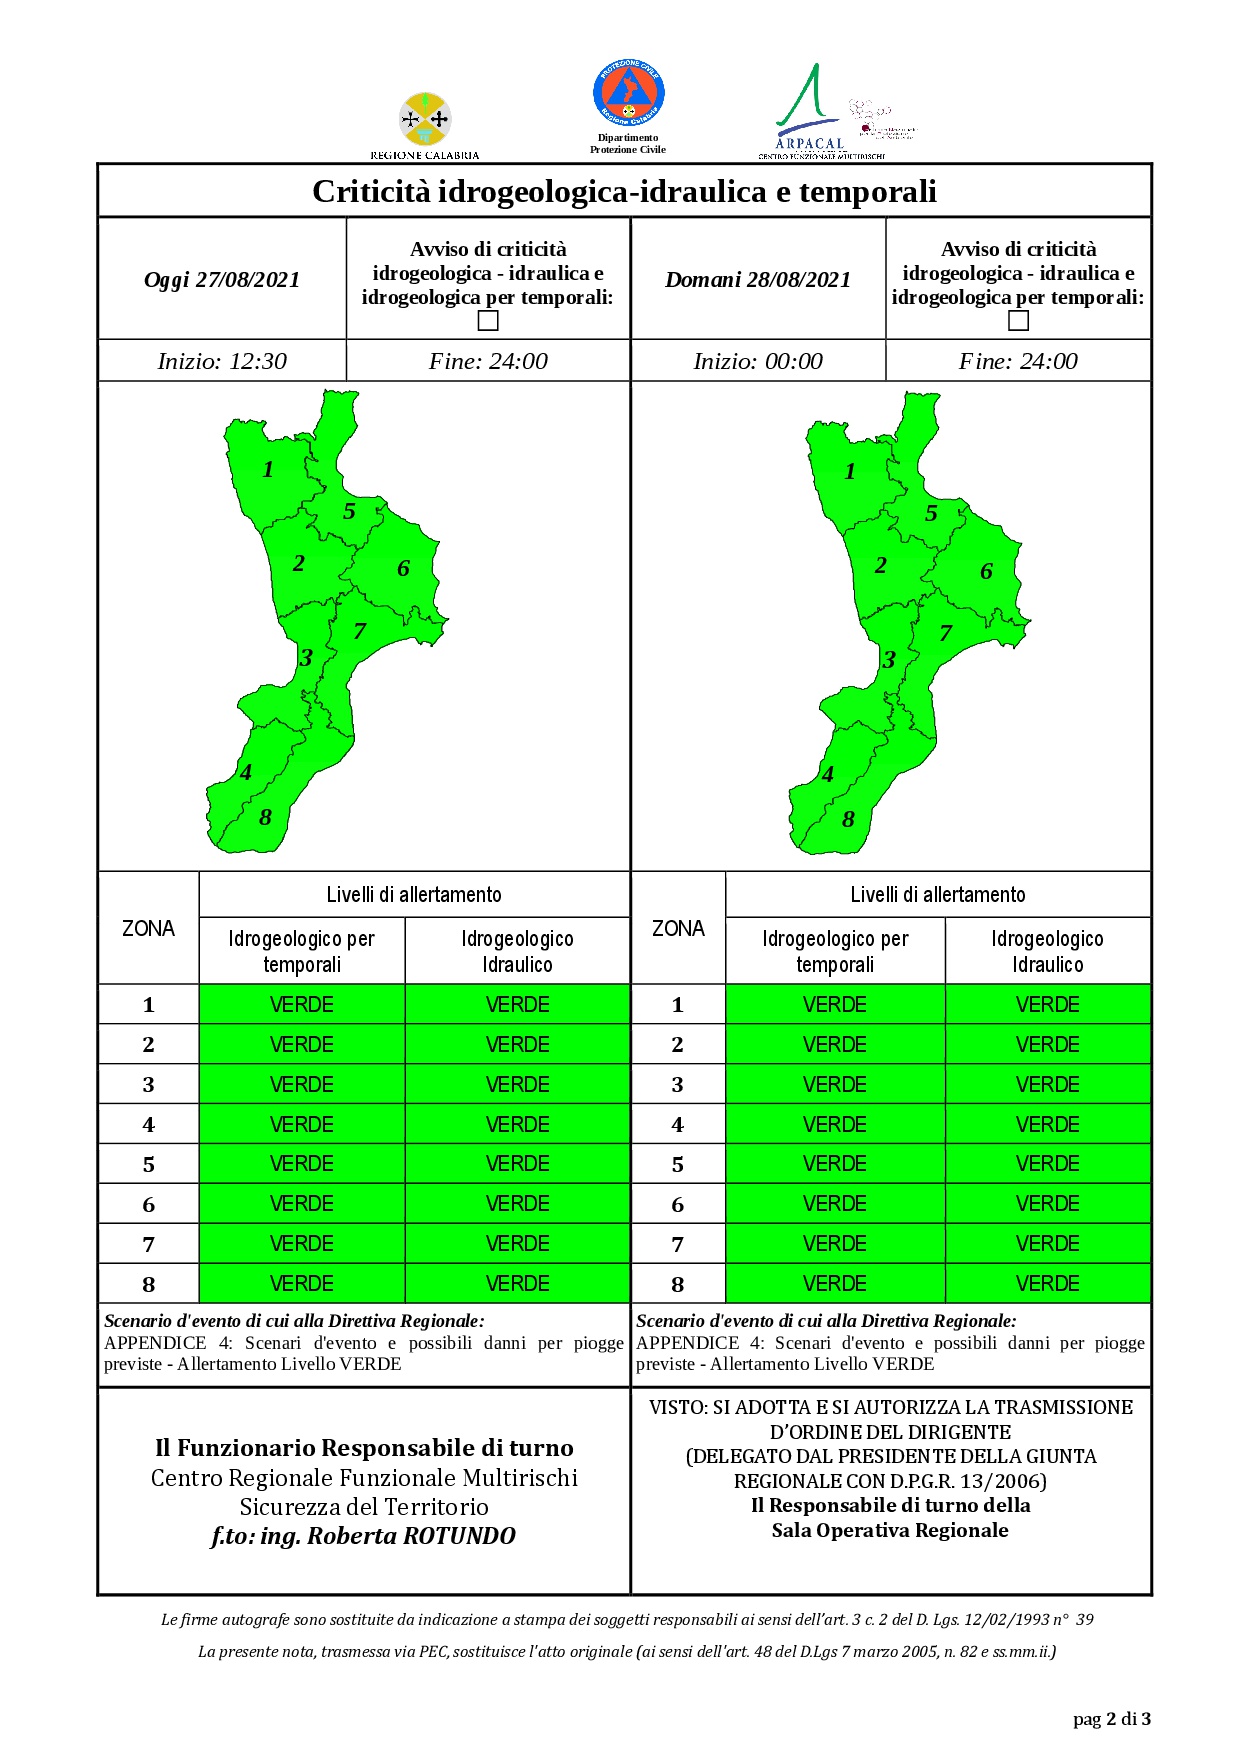 Criticità idrogeologica-idraulica e temporali in Calabria 27-08-2021